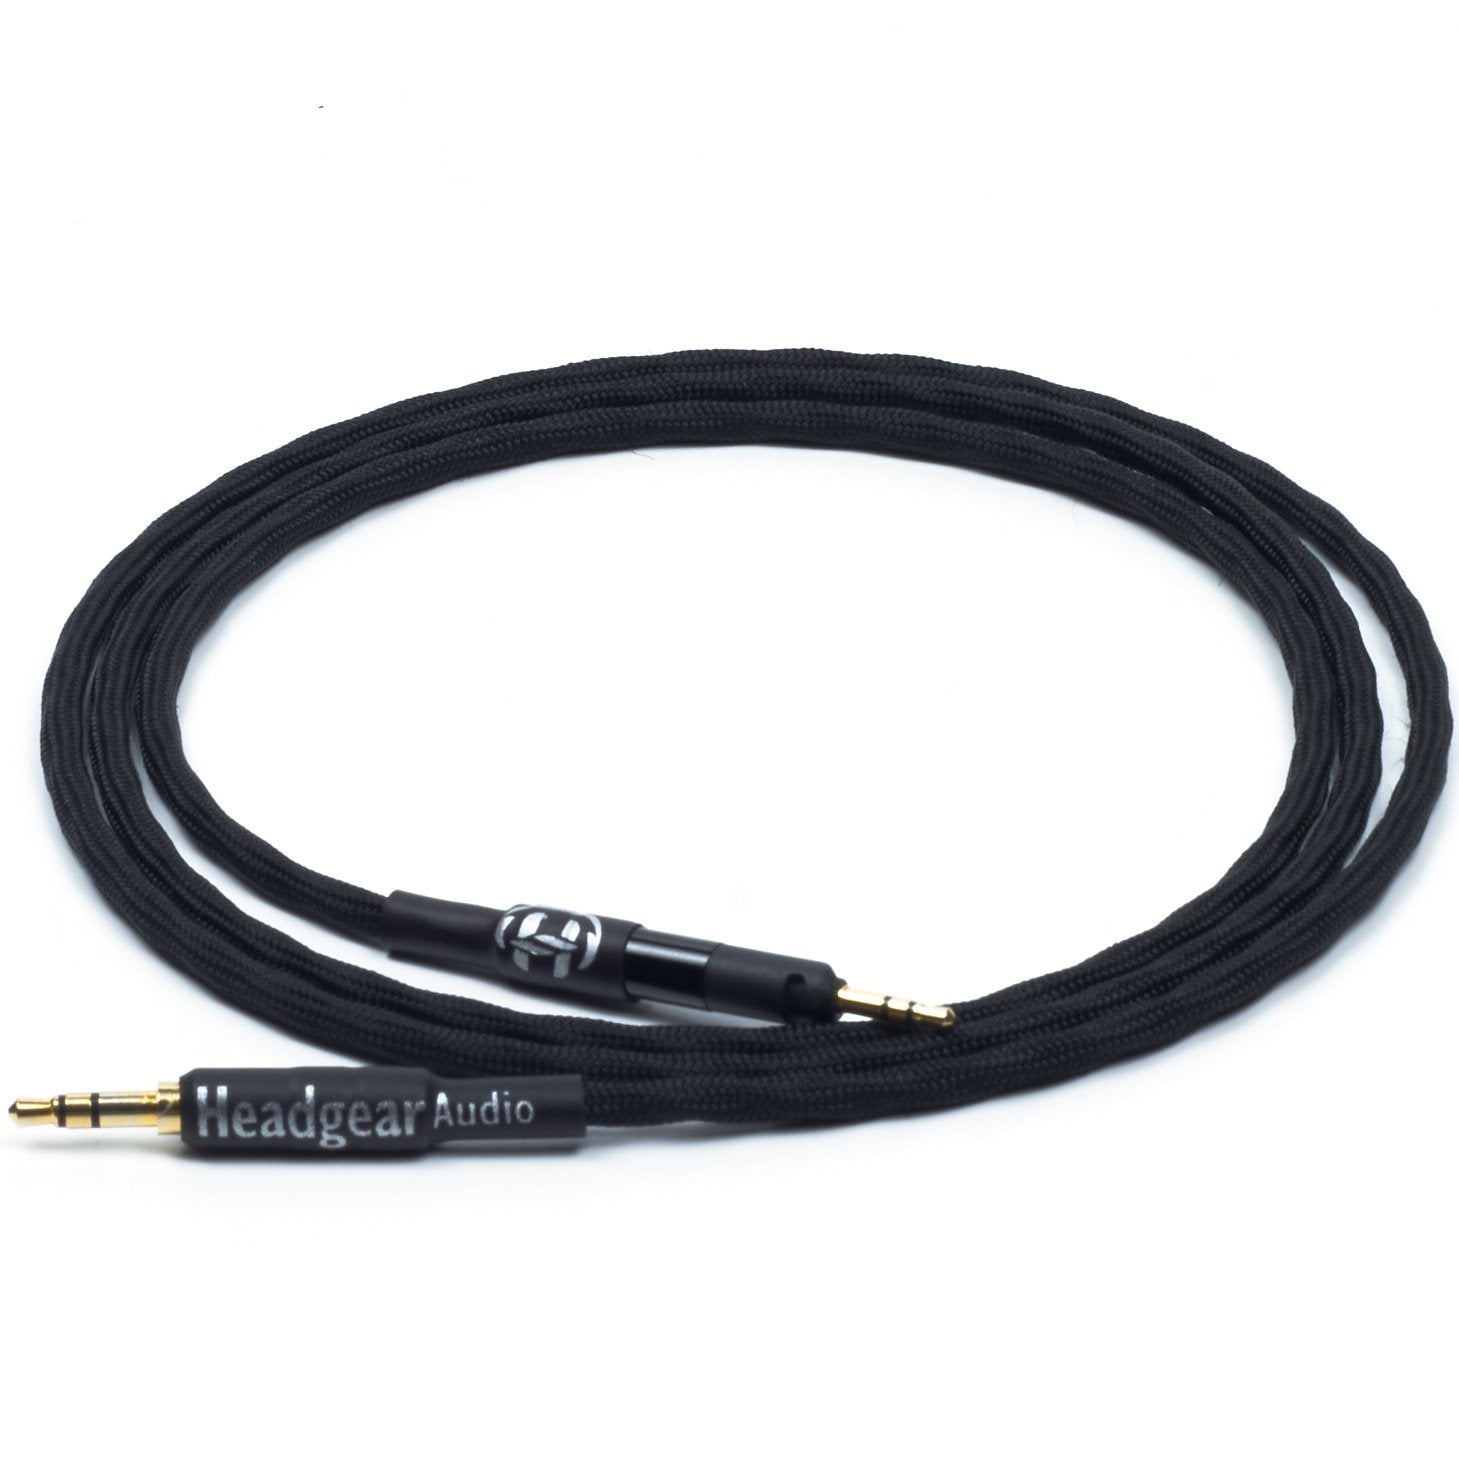 Cable de repuesto para auriculares Sennheiser Hd598 Hd599 Hd569 Auriculares  Audios Cor,11 kaili Sencillez